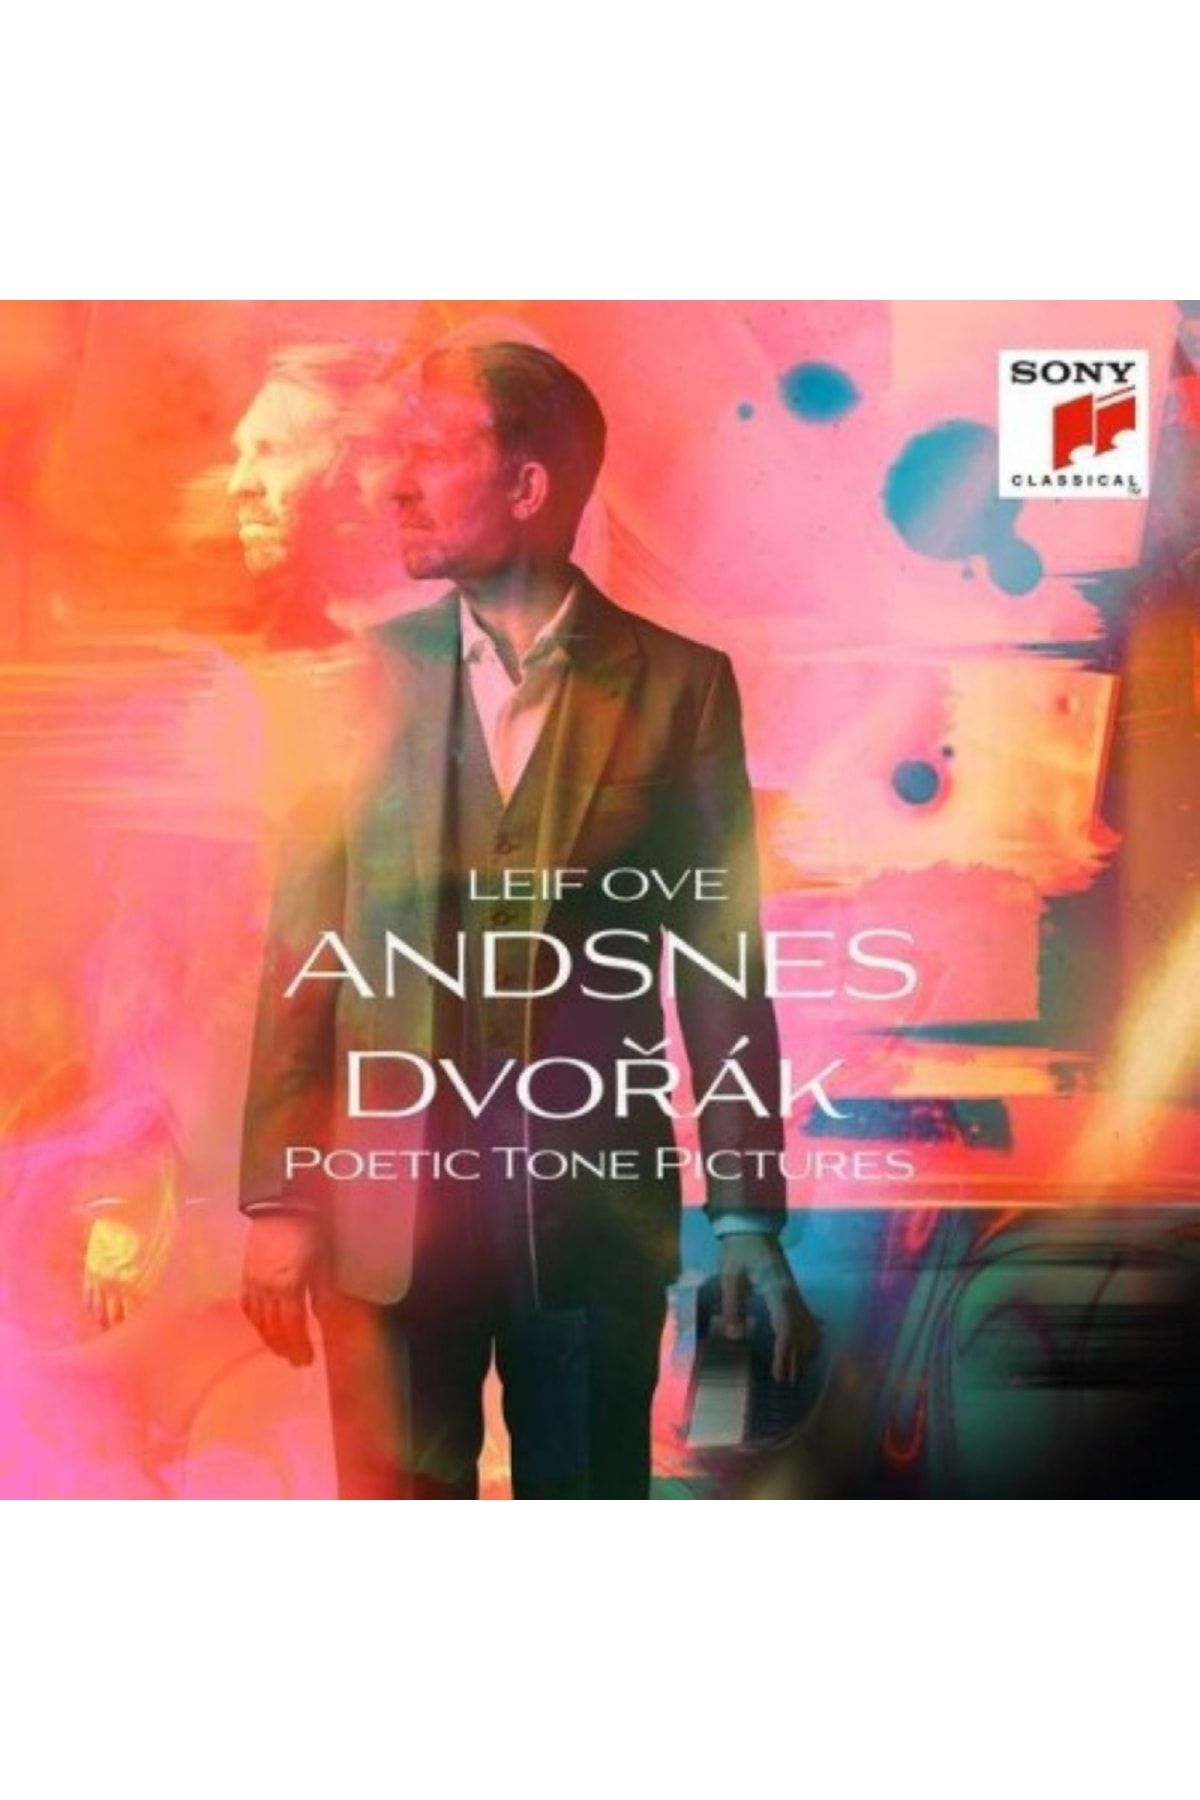 Sony Leif Ove Andsnes-dvorak: Poetic Tone Pictures Op.85 Lp